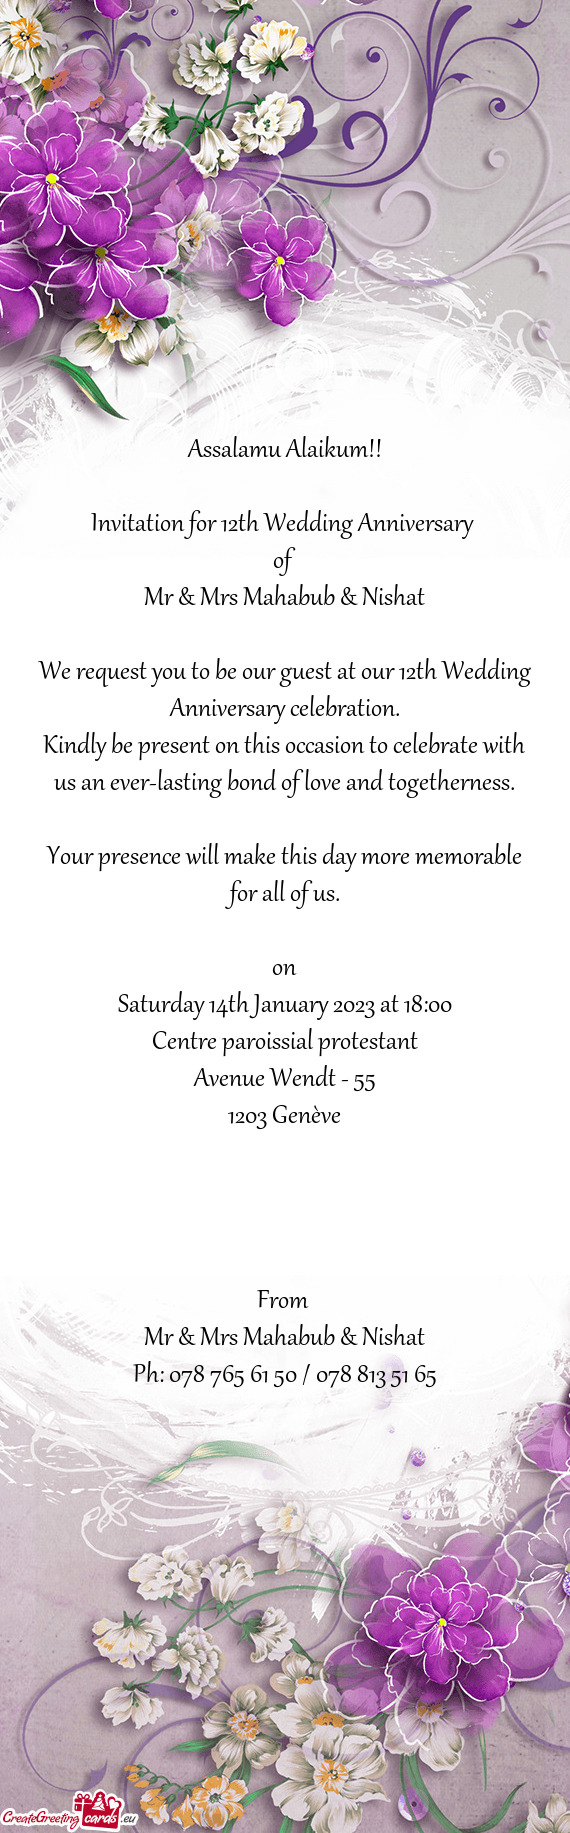 Invitation for 12th Wedding Anniversary